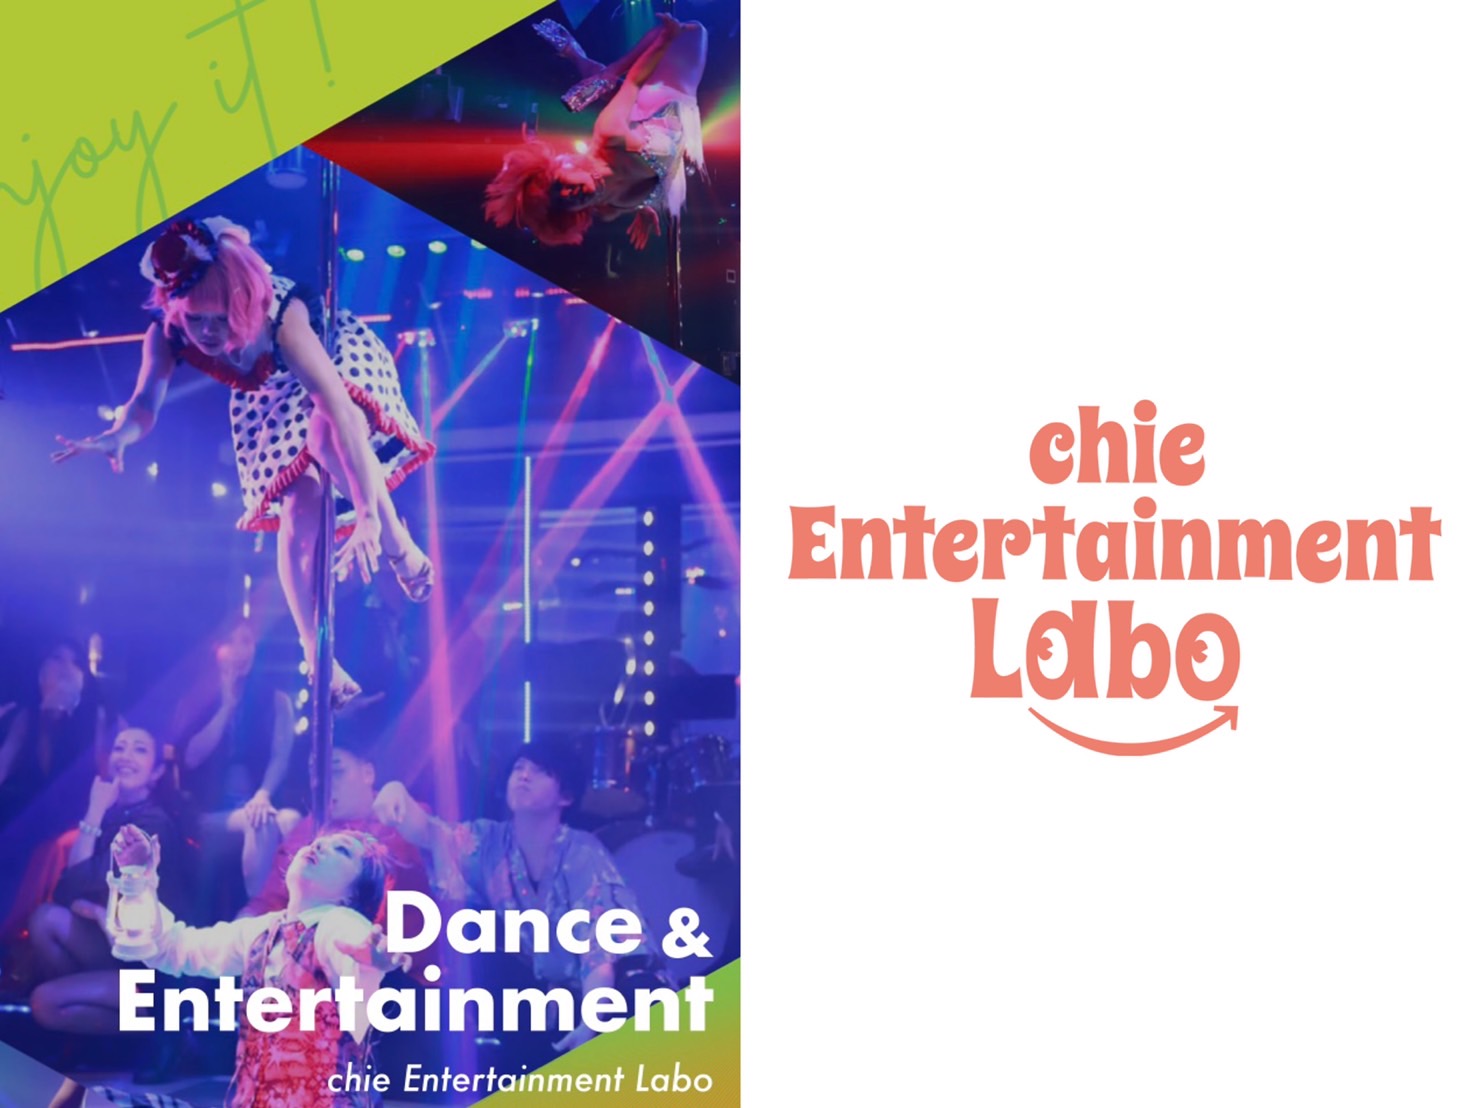 chie Entertainment Labo 祇園レッスン